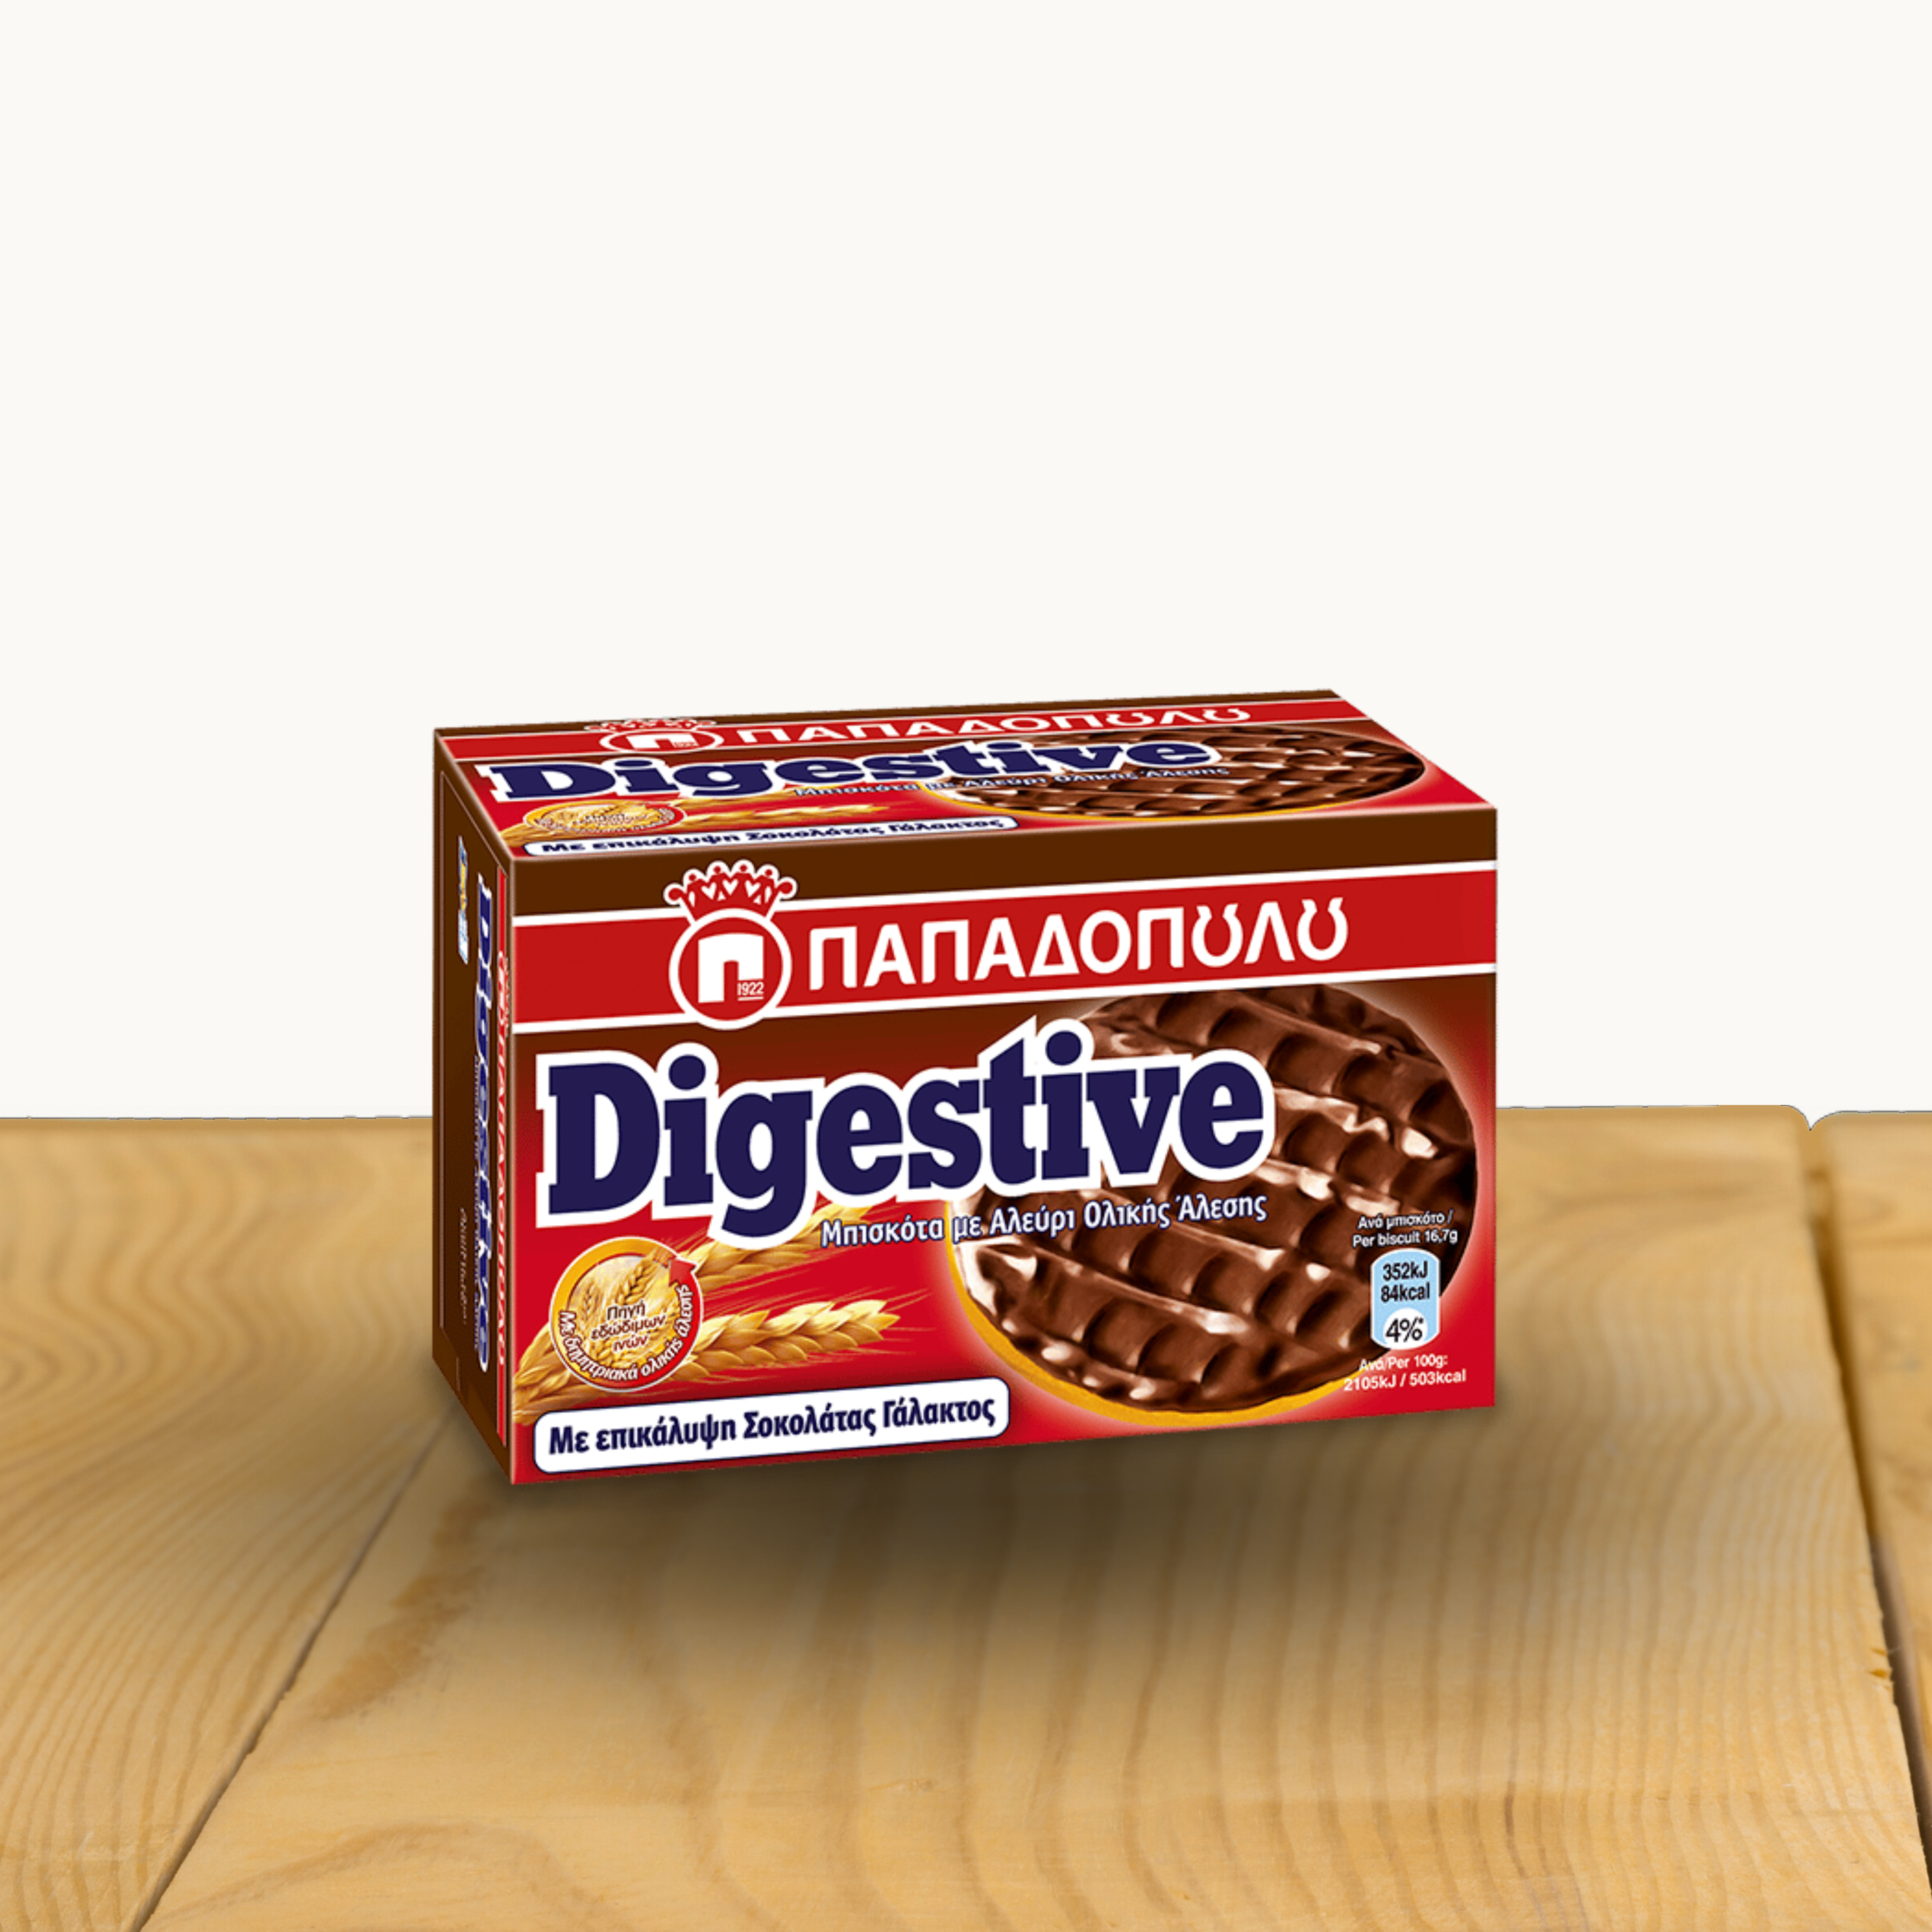 PAPADOPOULOU— Digestive Kekse mit Milchschokolade, 200gr